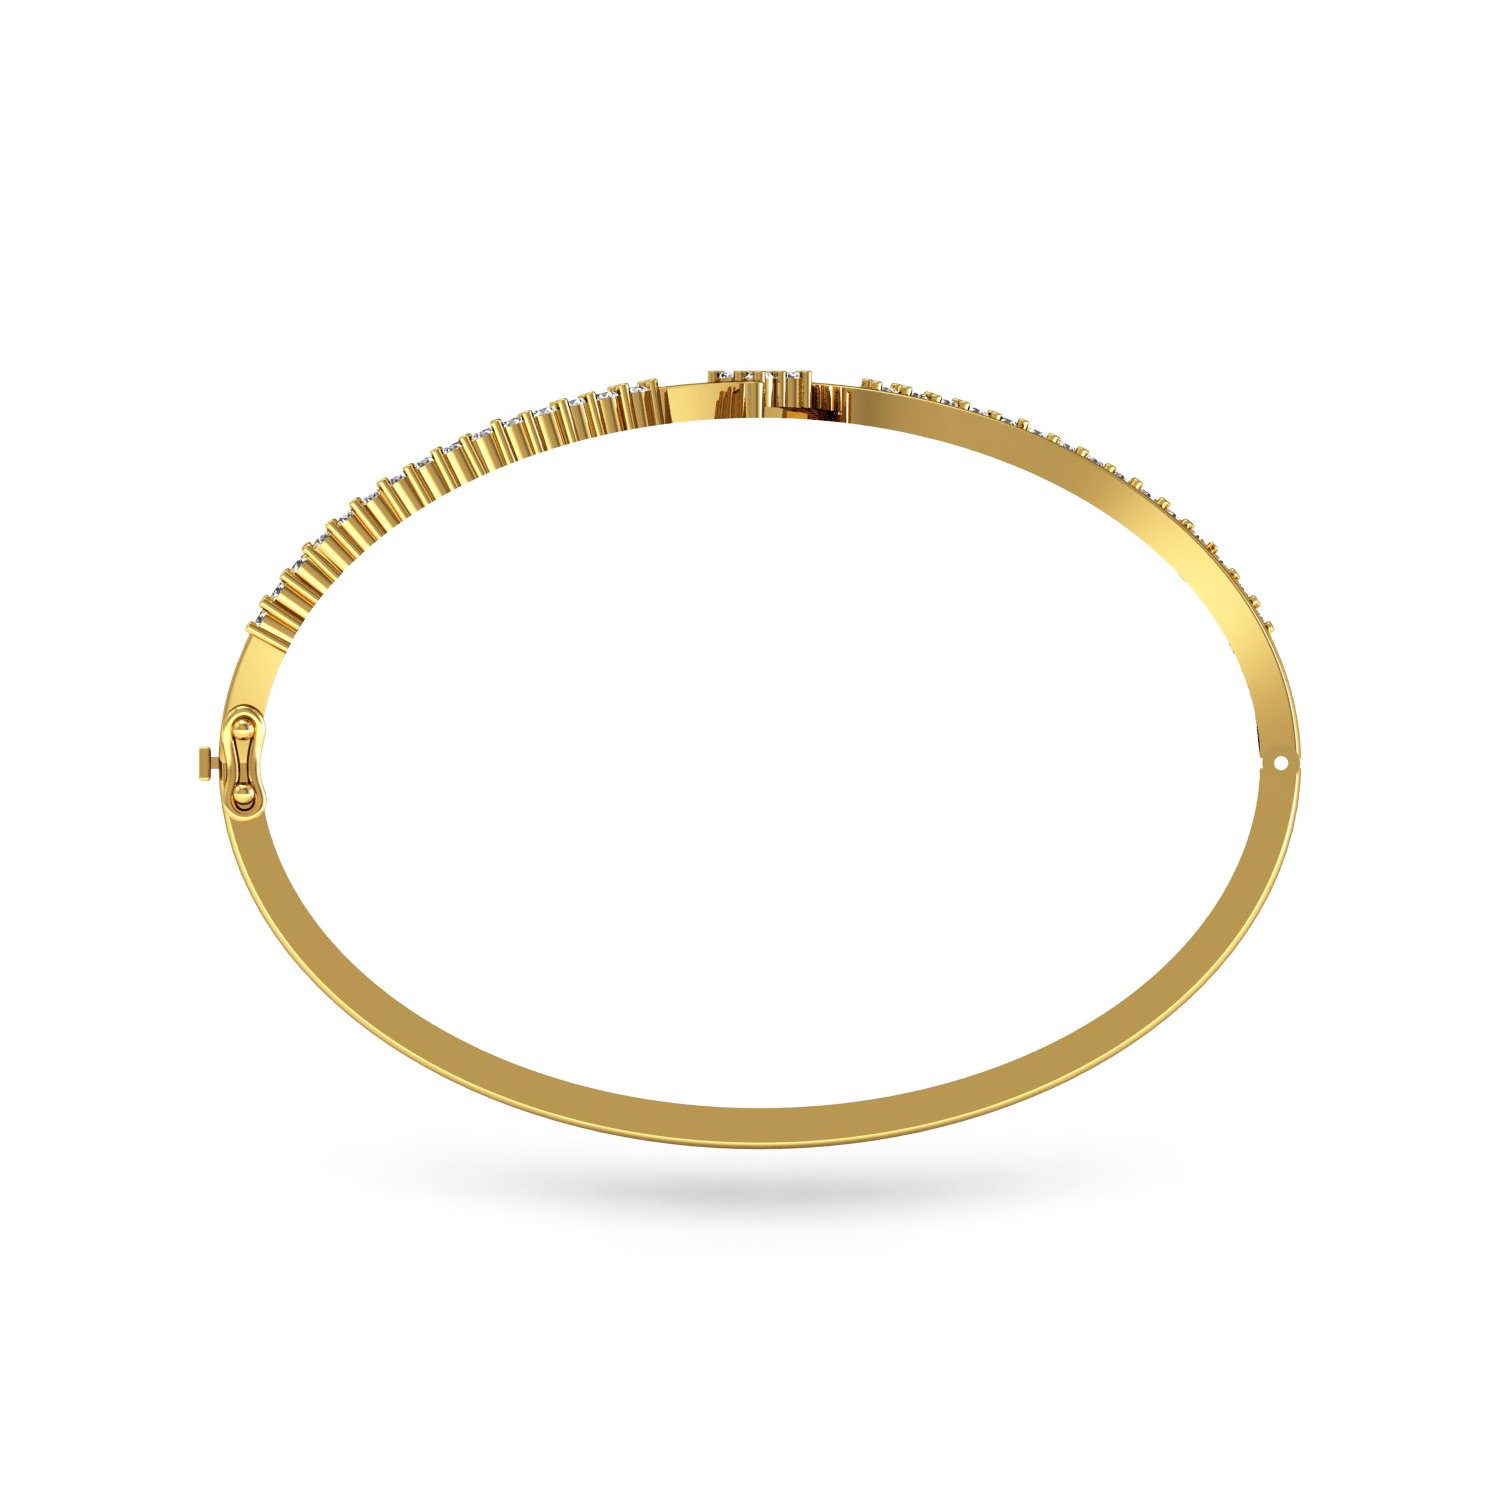 Natural diamond solid gold bangle bracelet